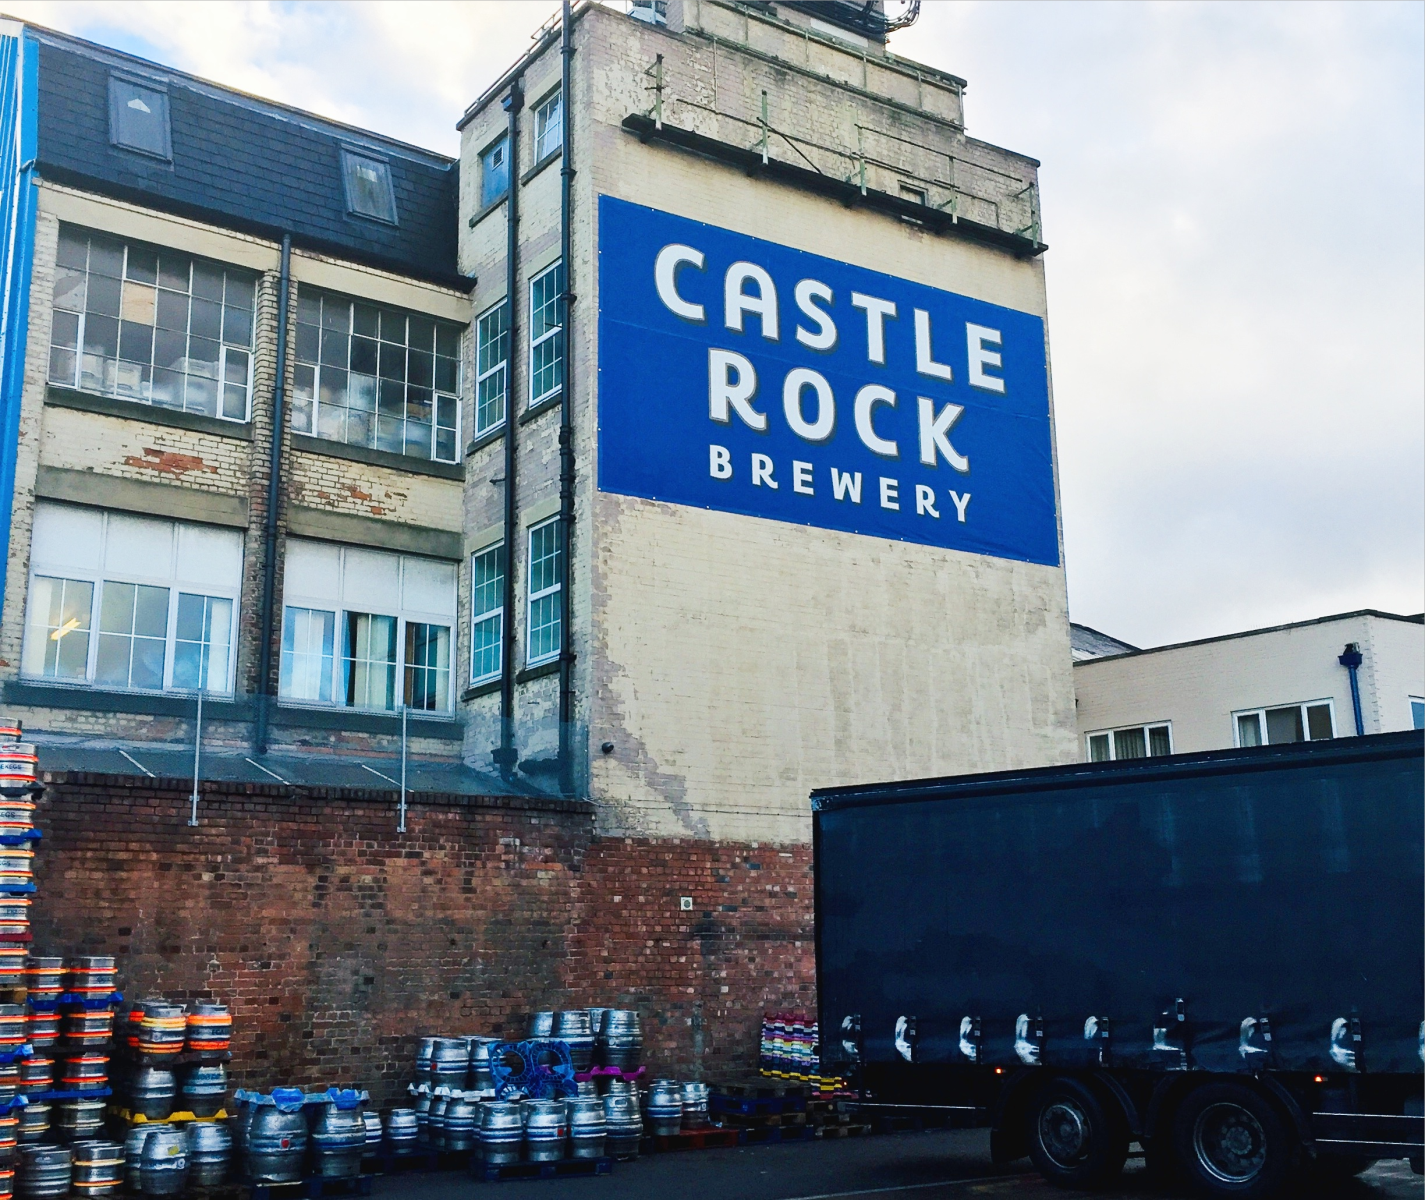 Castle Rock Brewery | Visit Nottinghamshire